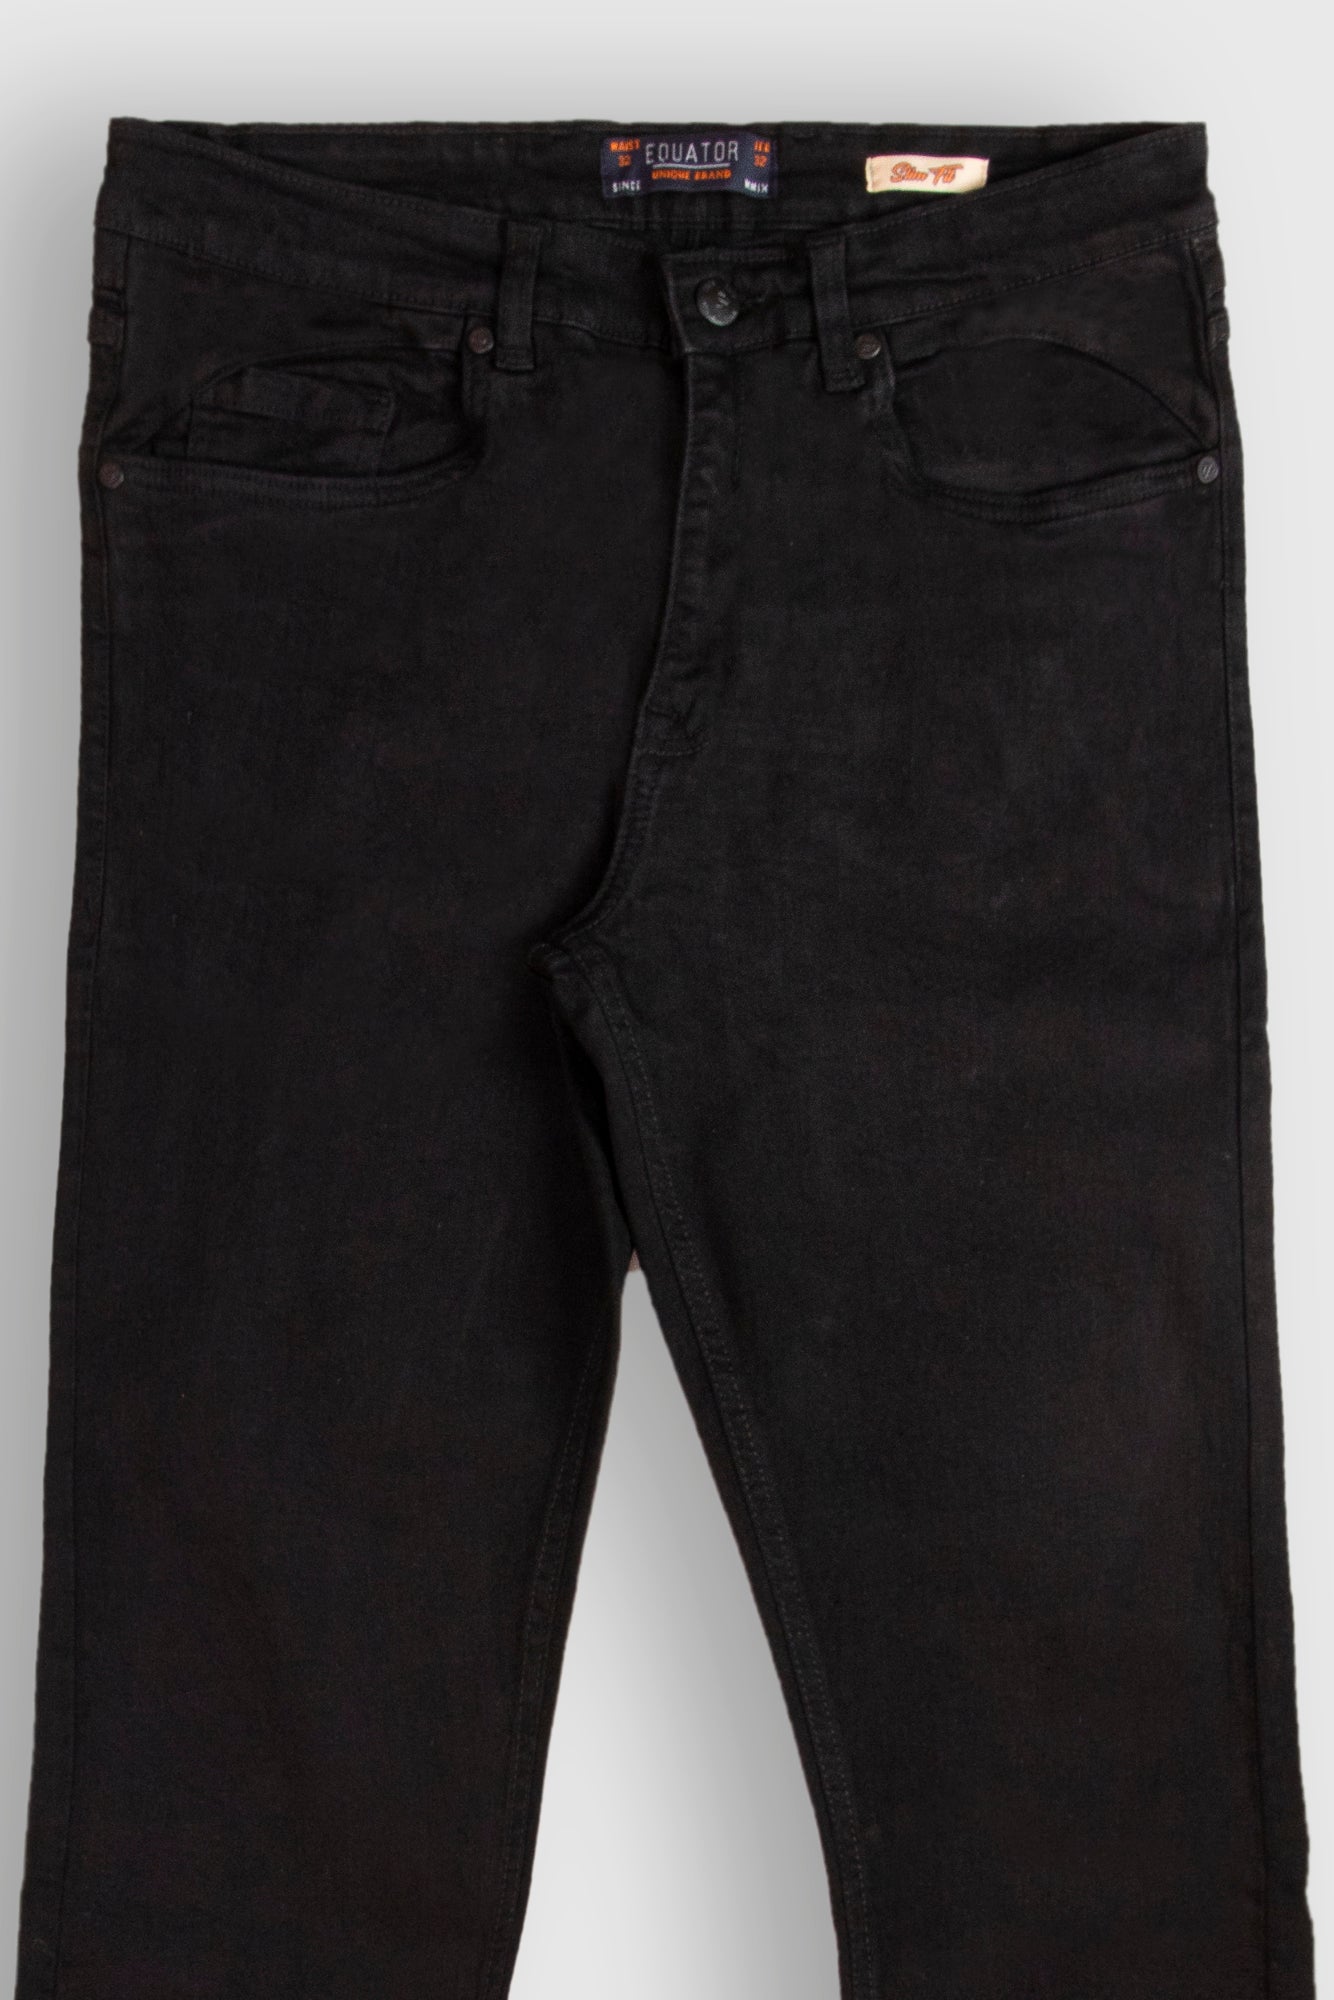 Black Denim Jeans